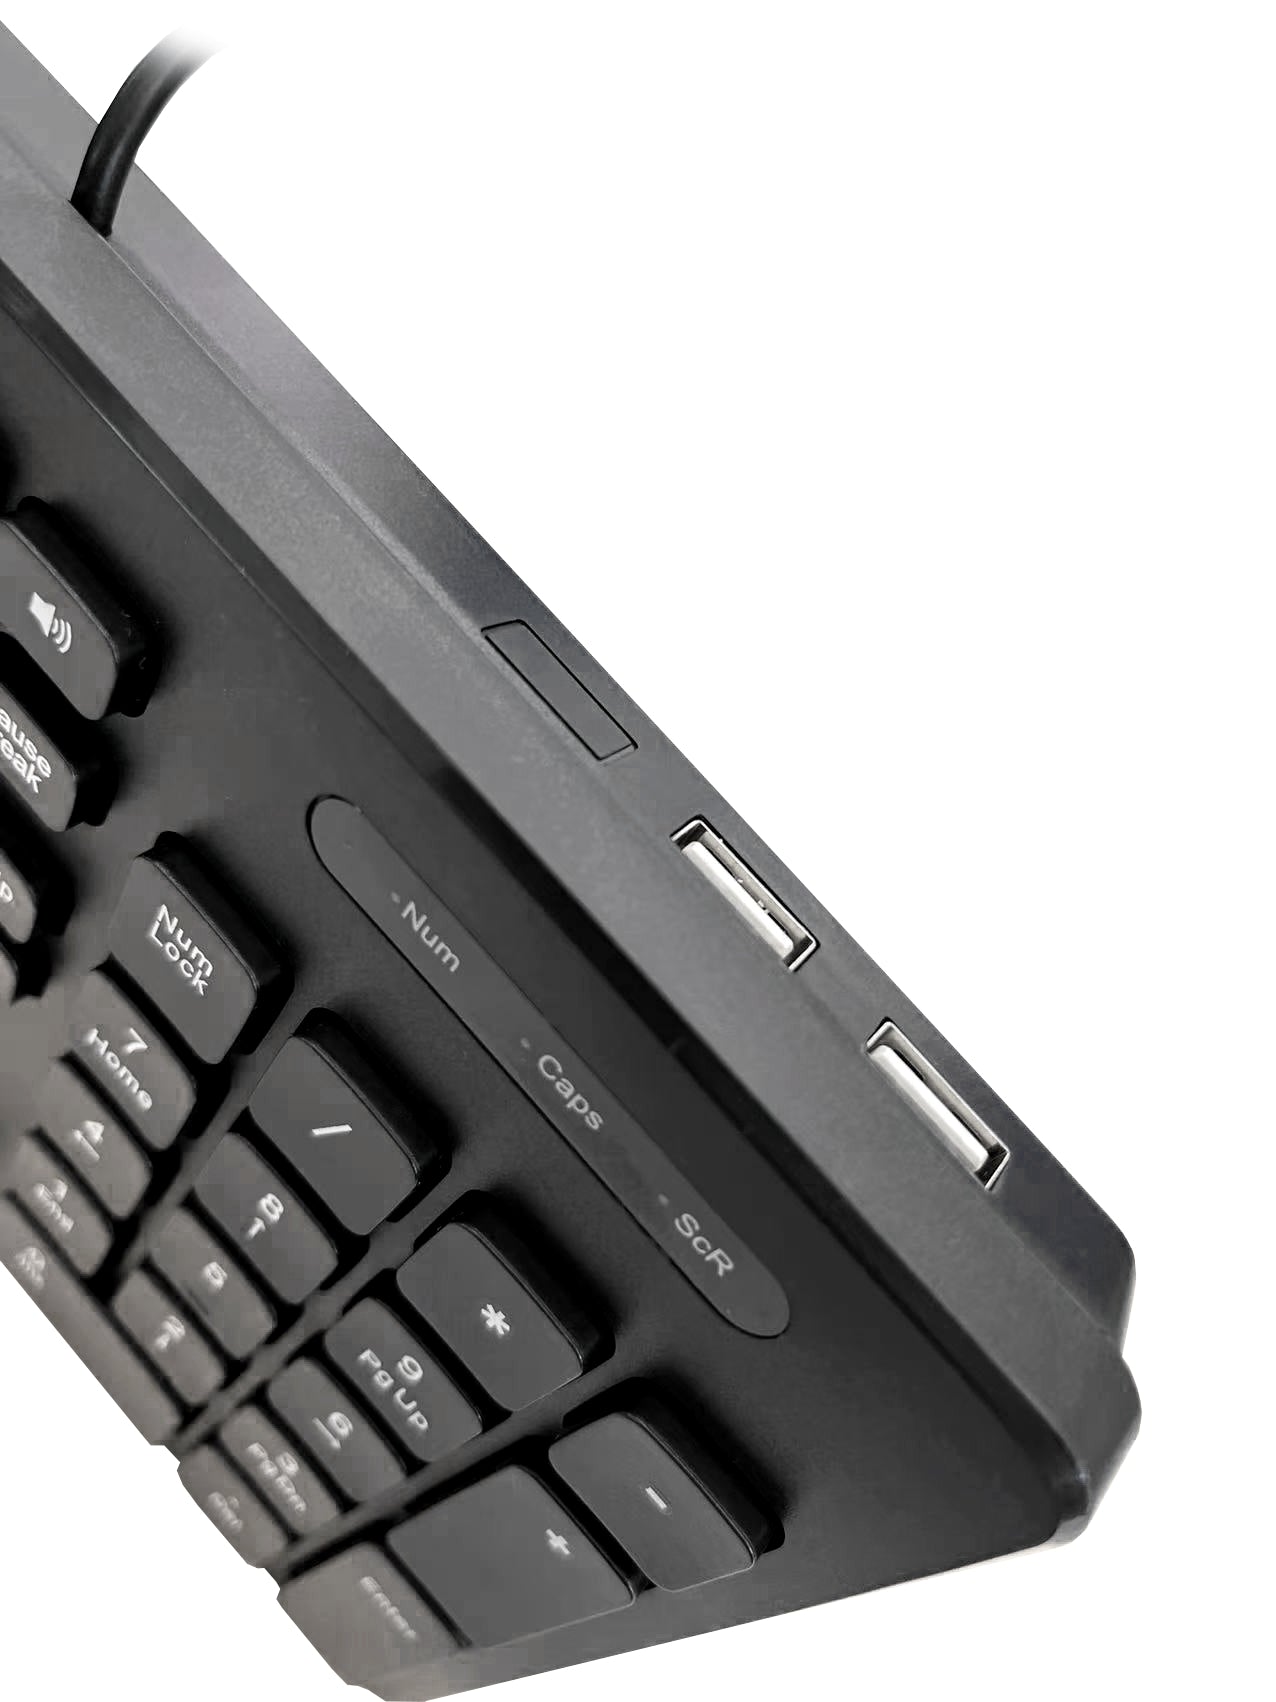 Accuratus 360 Hub - USB Full Size Professional Slim Multimedia Keyboard with 2 Port USB2.0 Hub